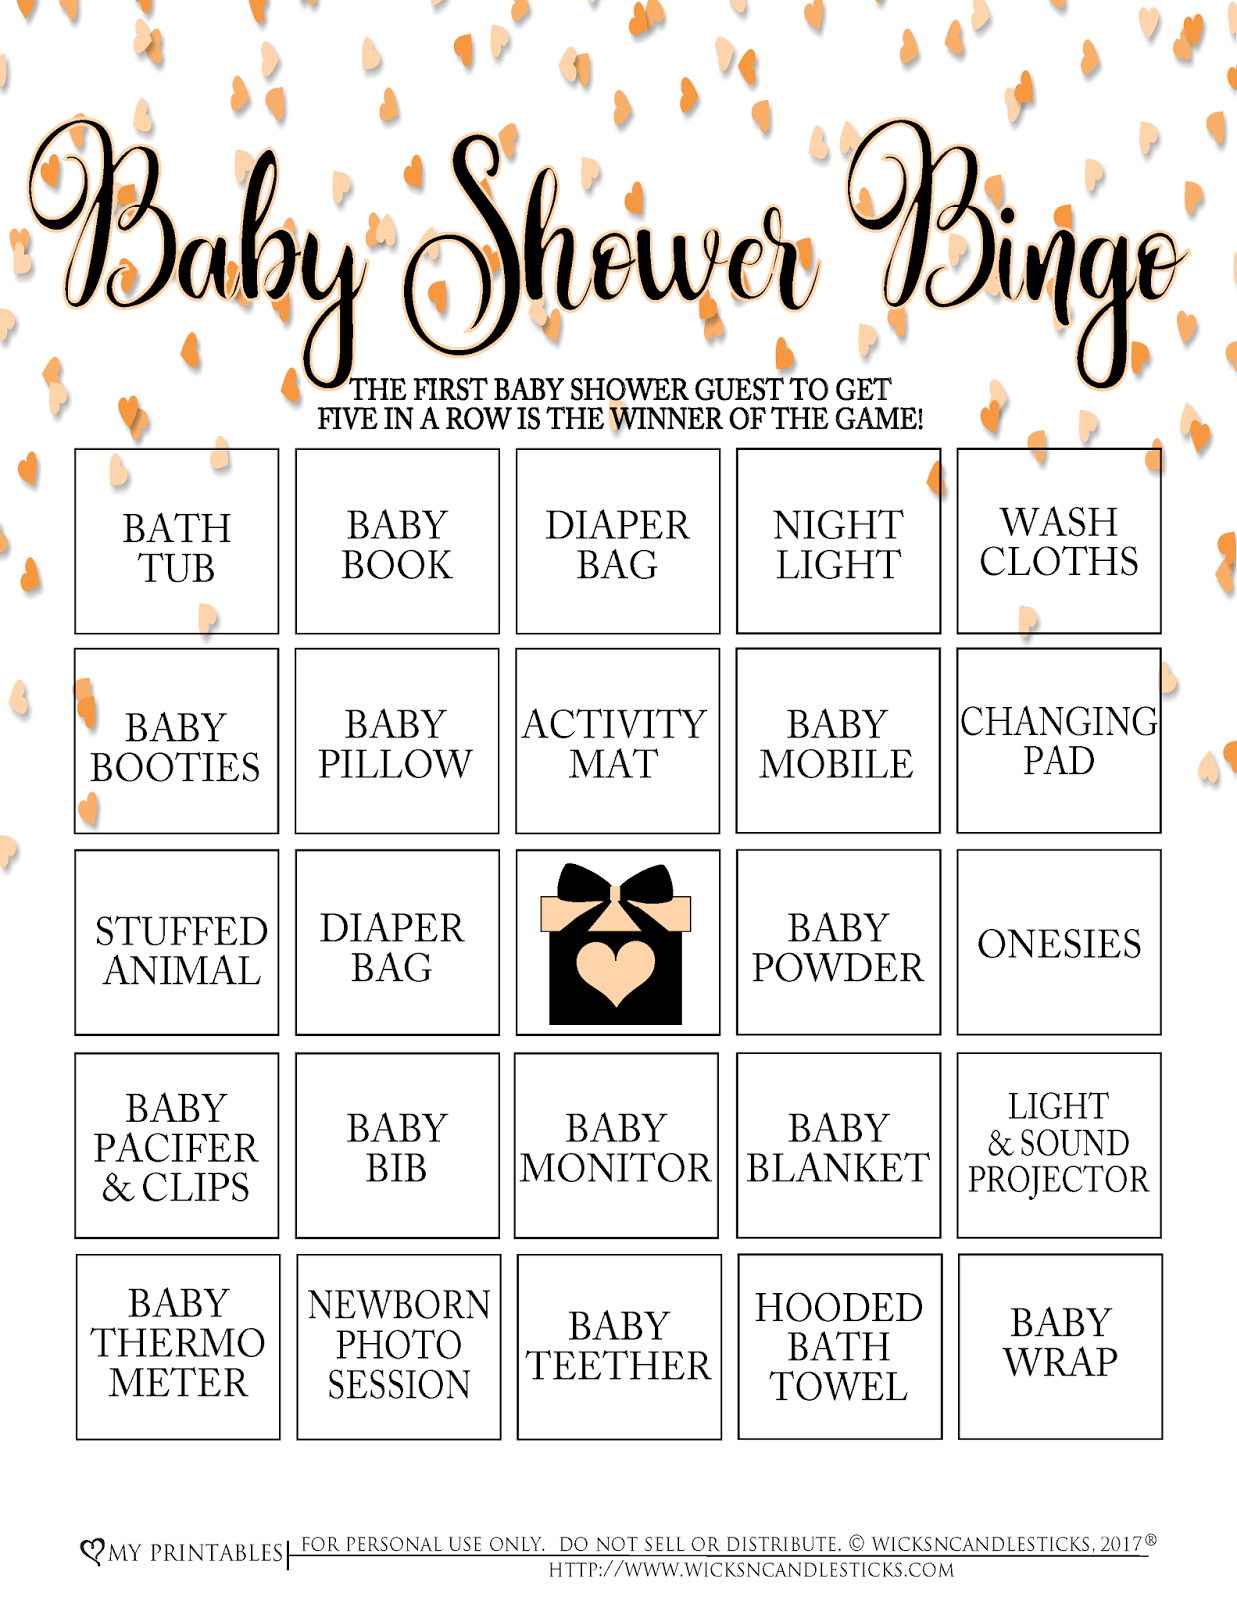 Wicksncandlesticks : It&amp;#039;s Bingo Baby! A Free Baby Shower Printable Game - Baby Bingo Game Free Printable